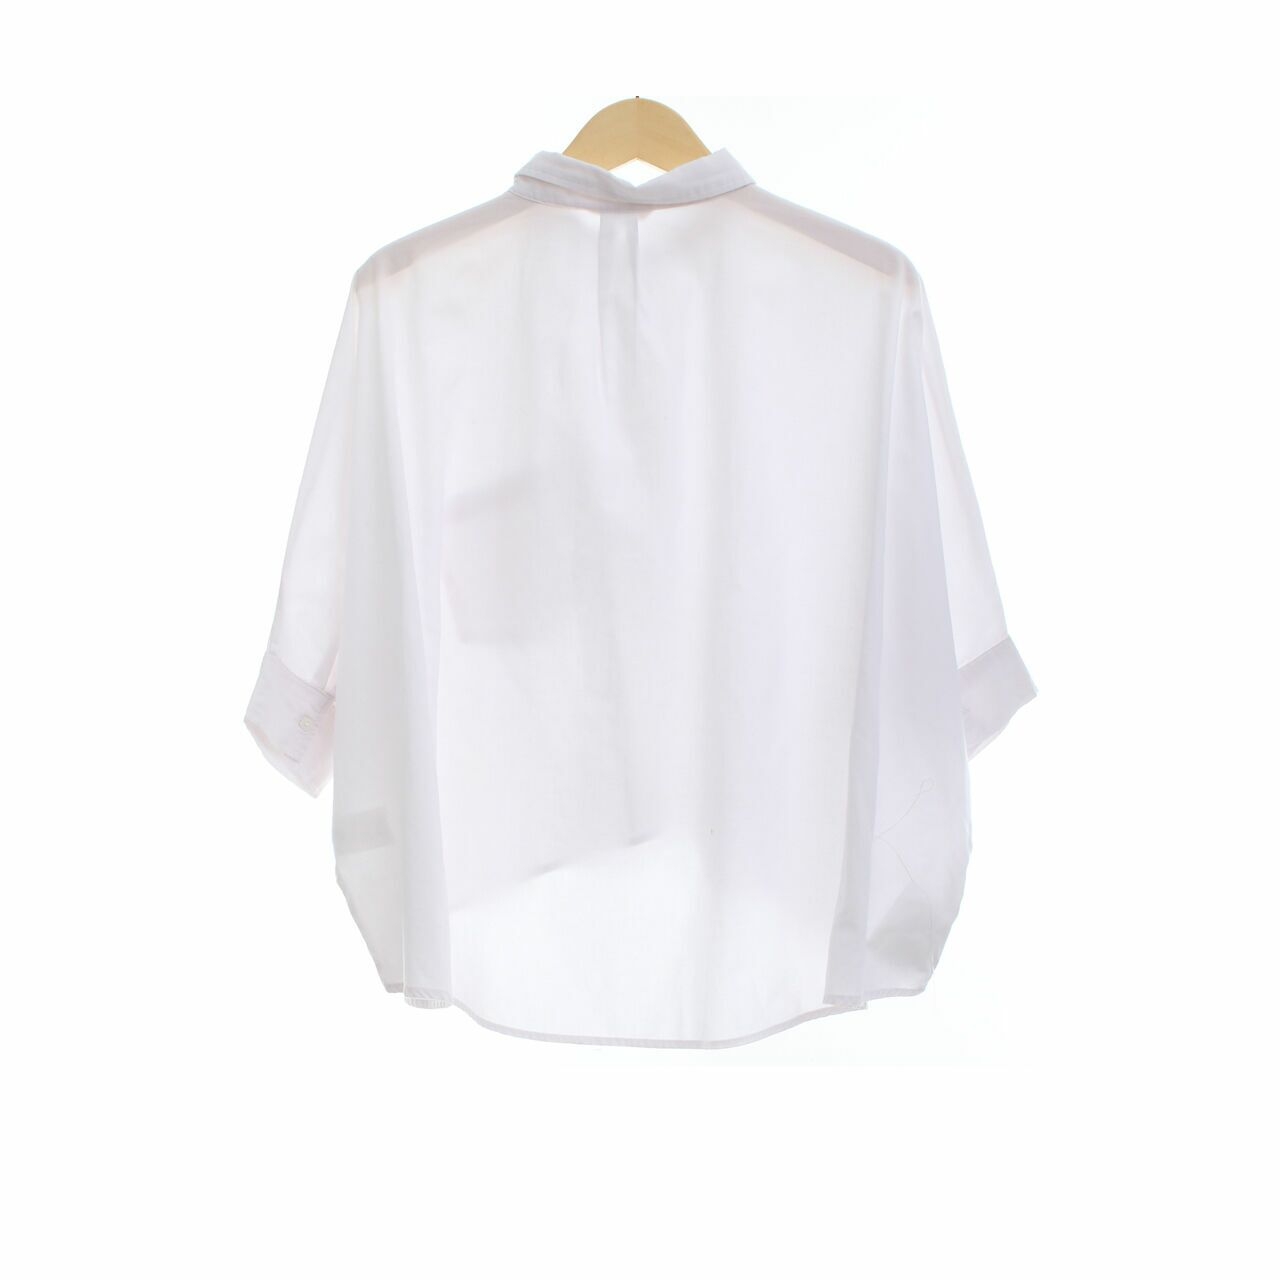 Schon Couture White Shirt210